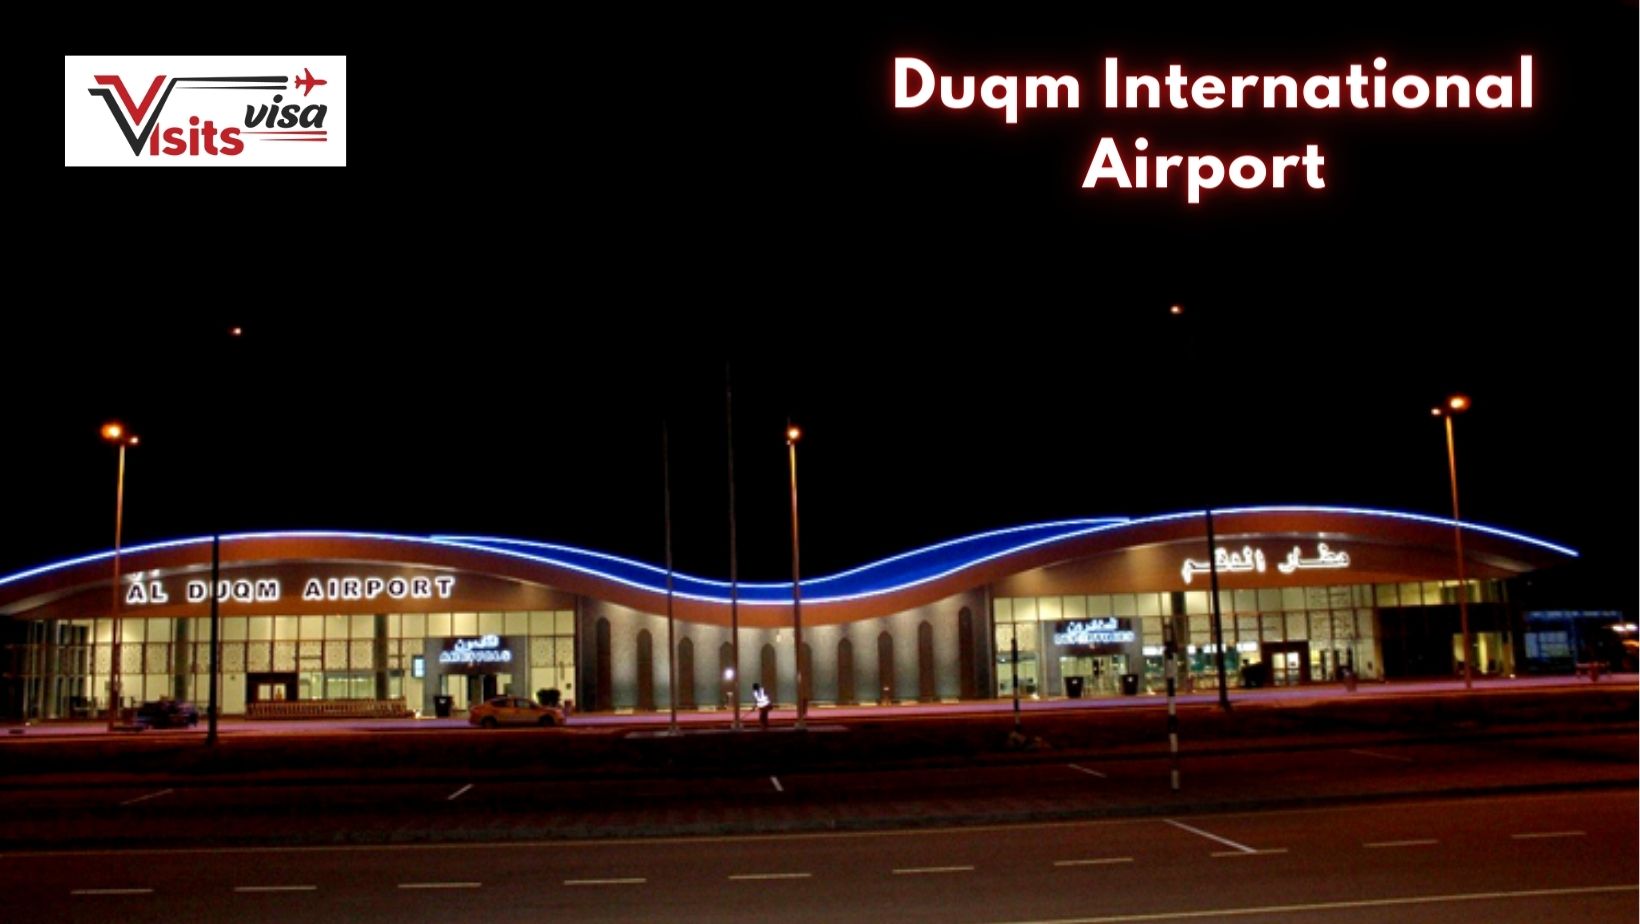 Duqm International Airport